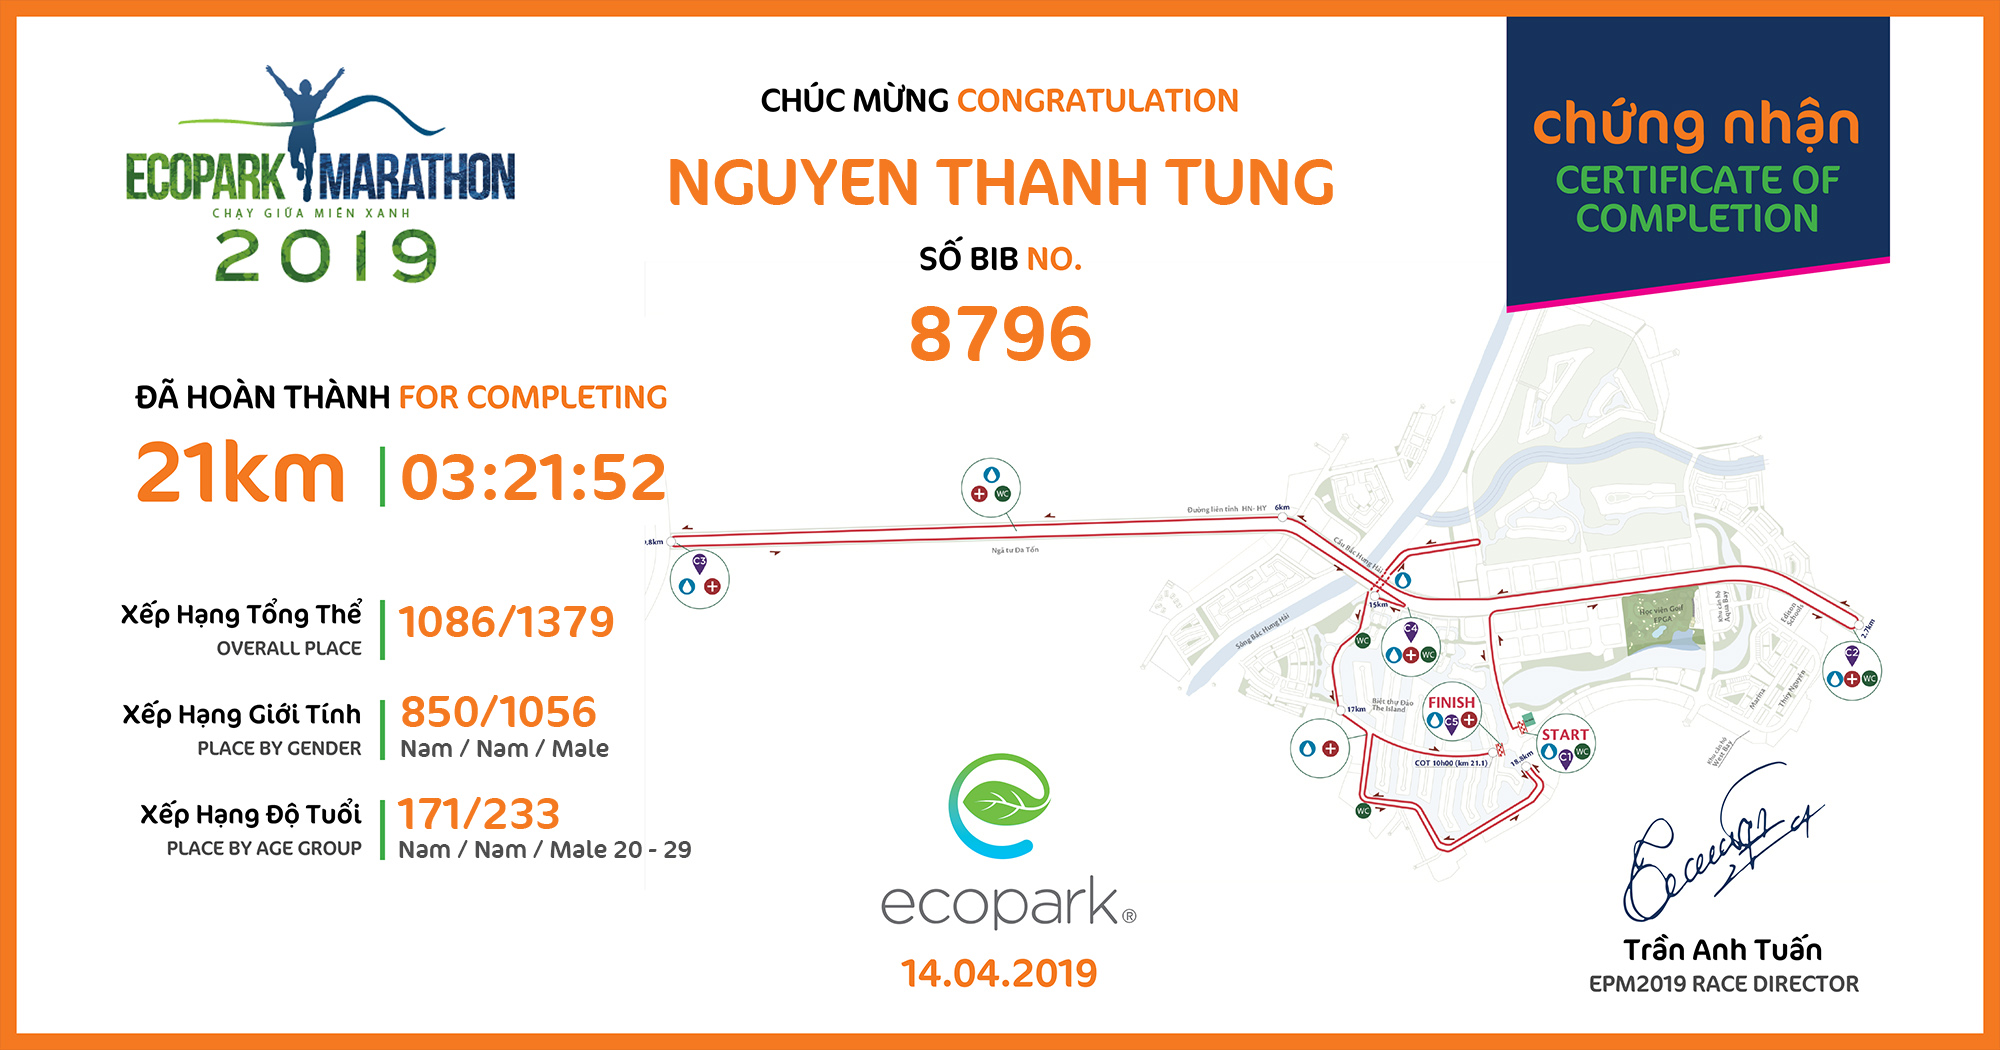 8796 - Nguyen Thanh Tung